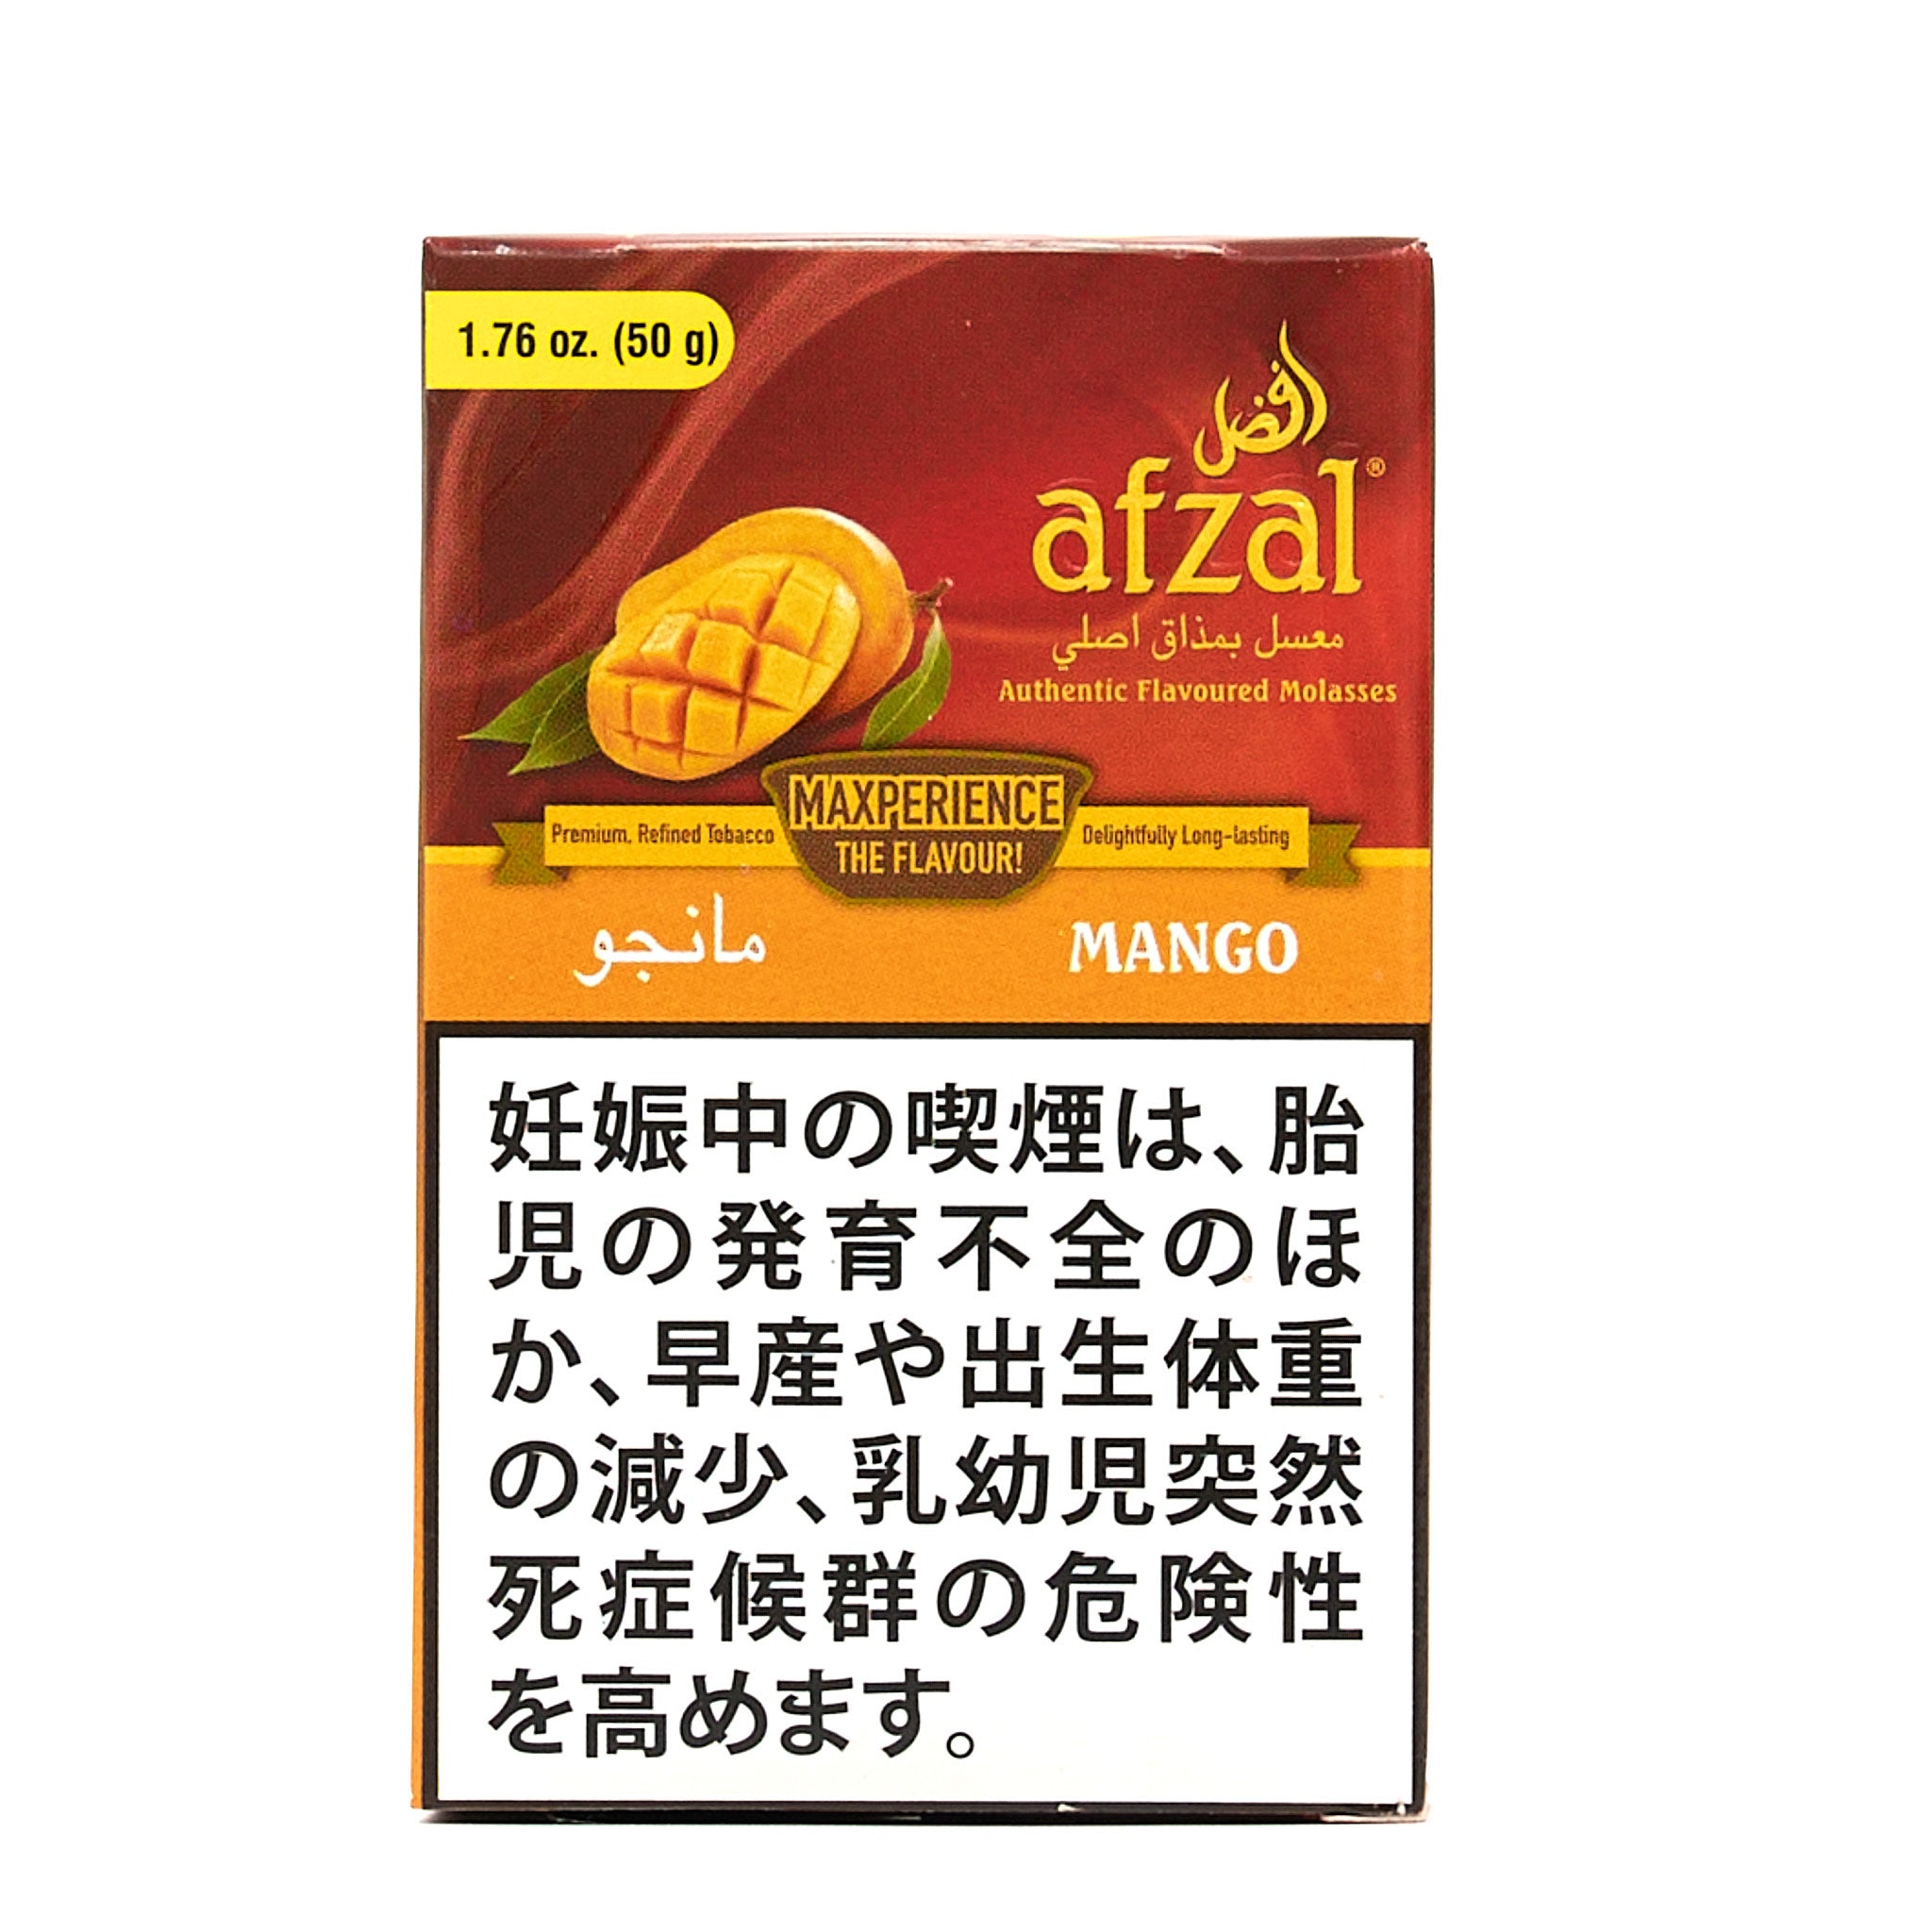 Mango / マンゴー (50g)